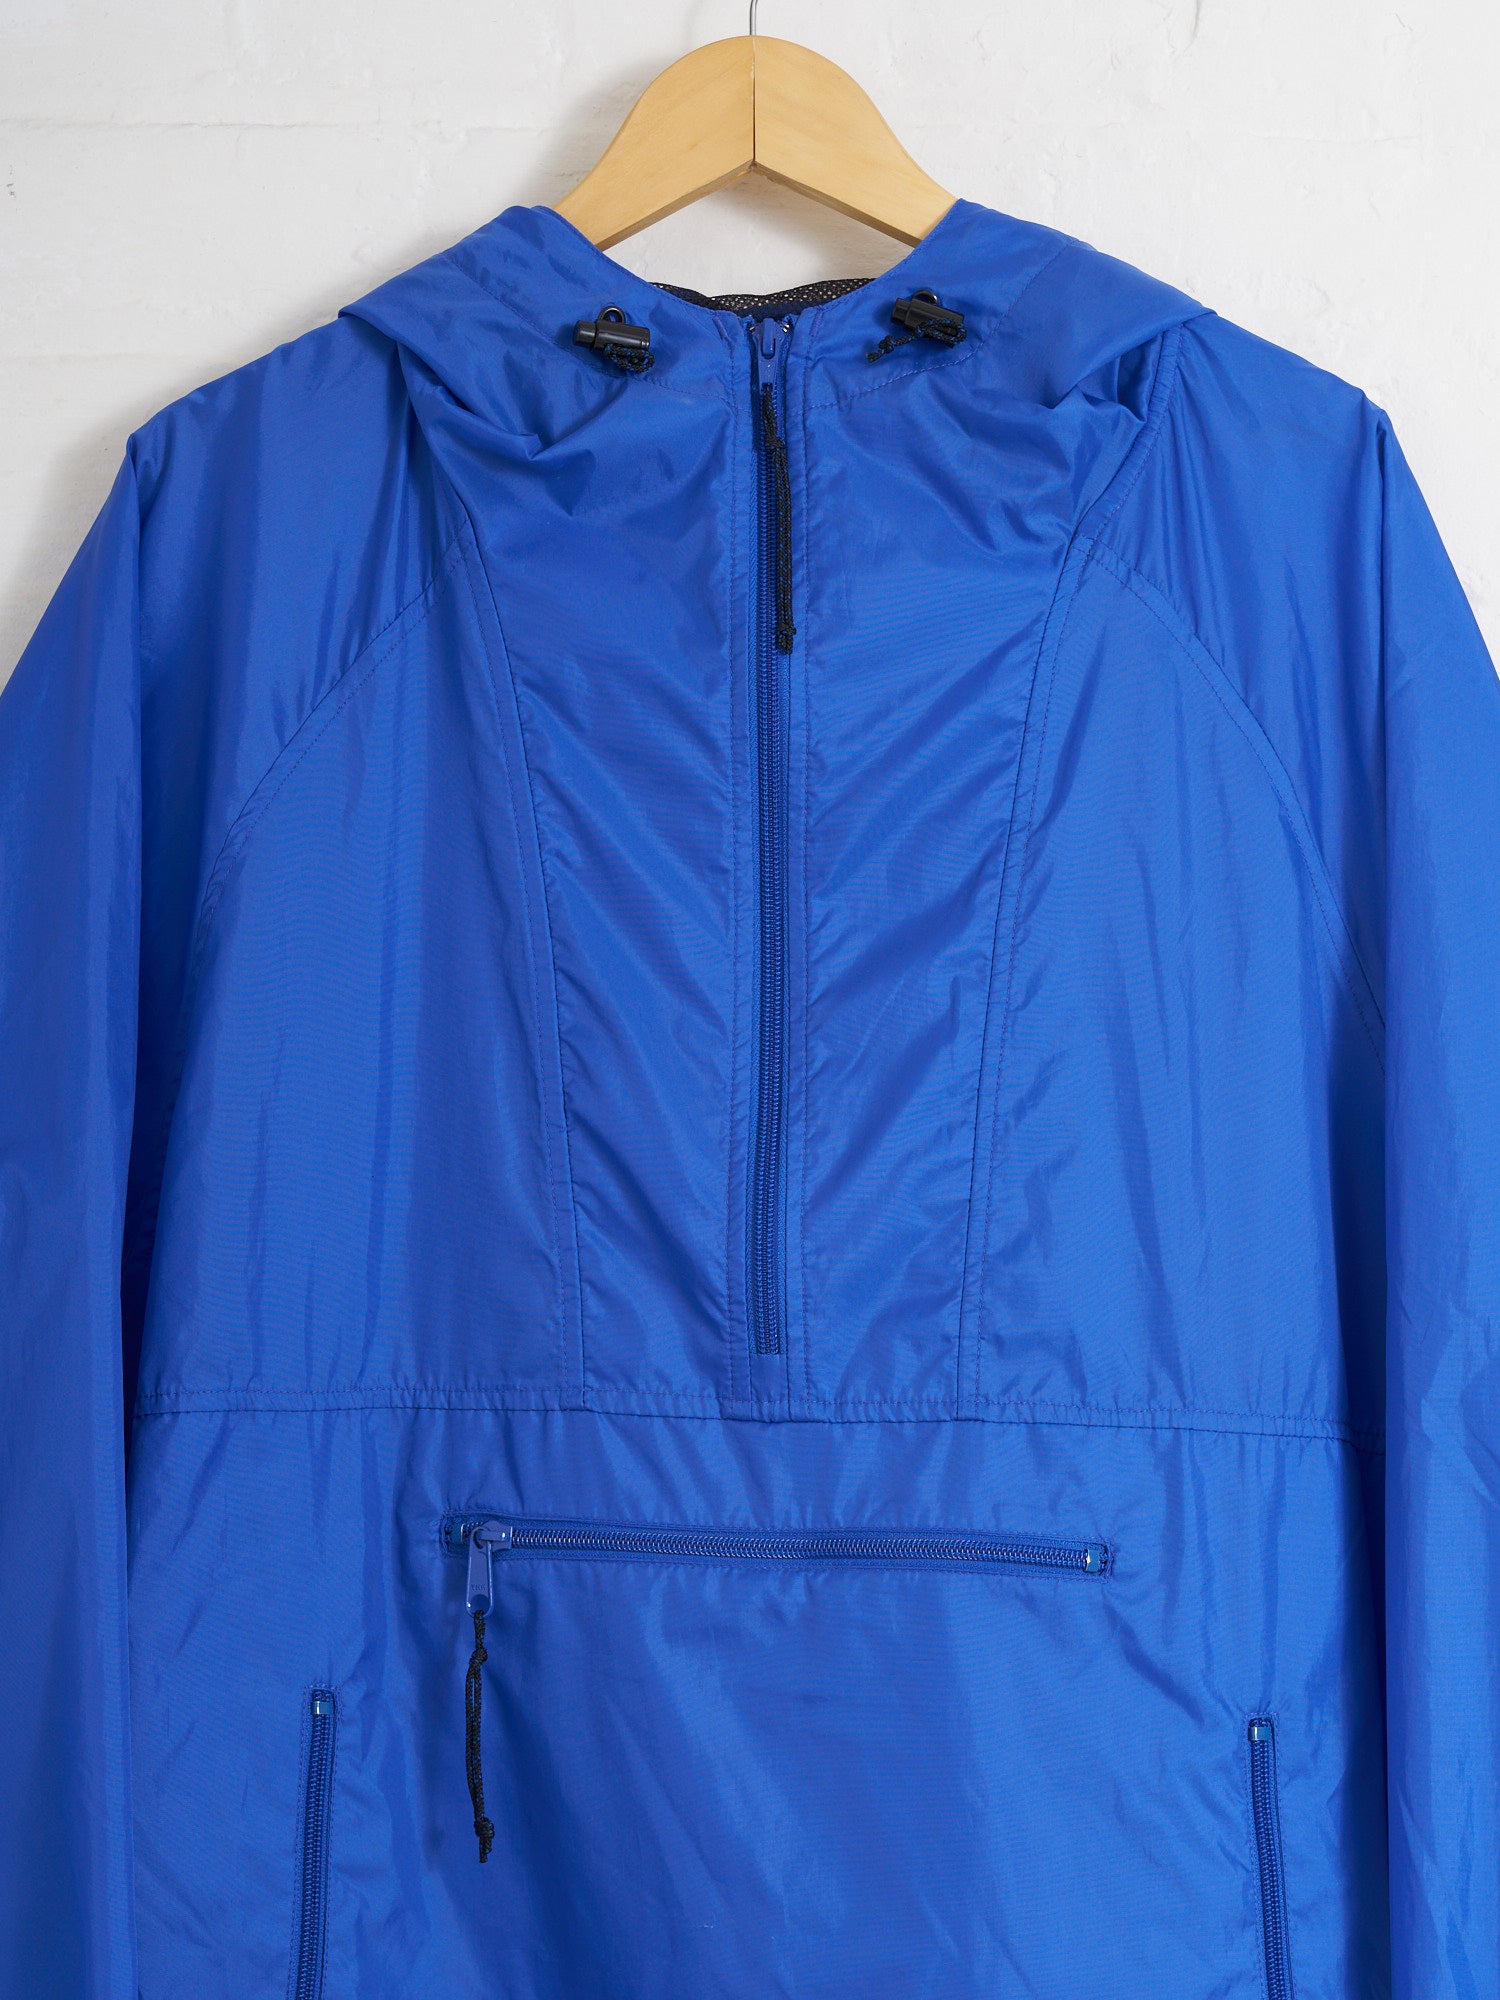 REI 1990s blue nylon pullover hooded windbreaker - L